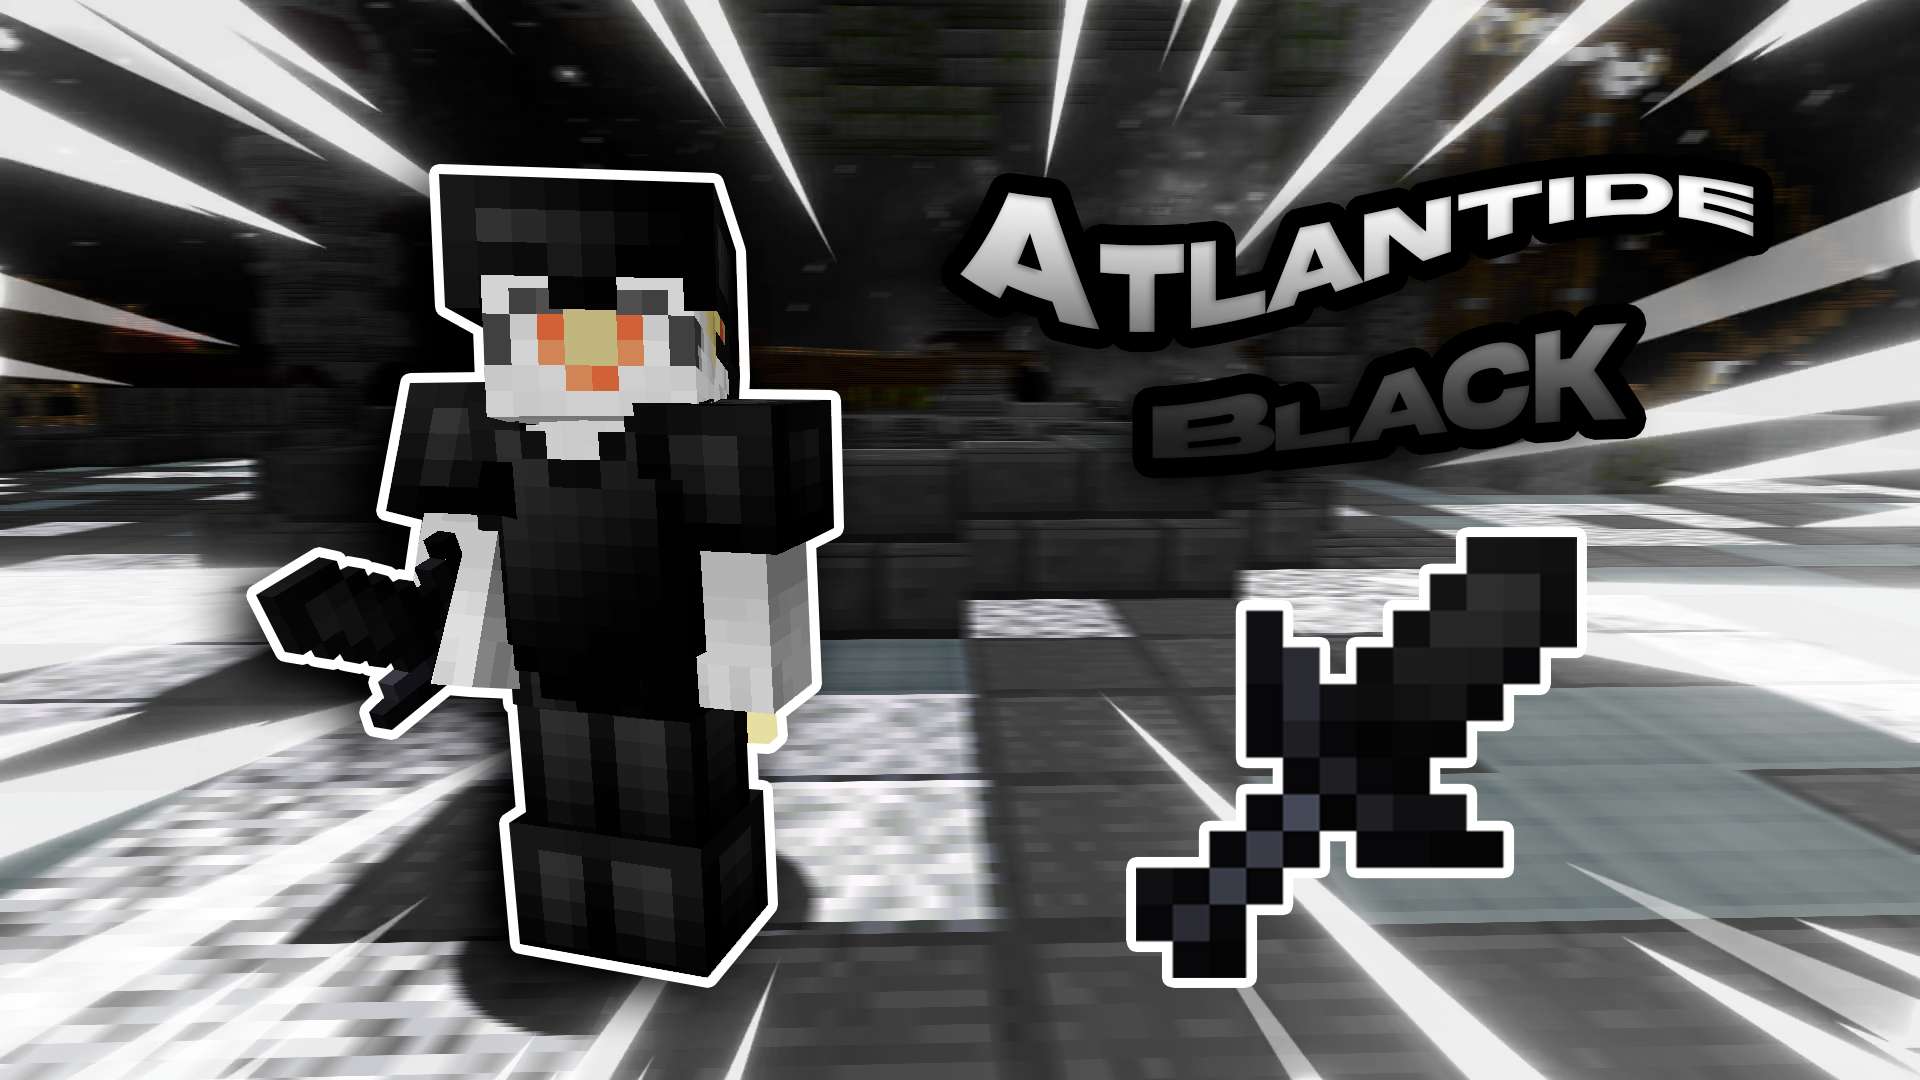 Atlantide (Black) 16x by Likorrne on PvPRP